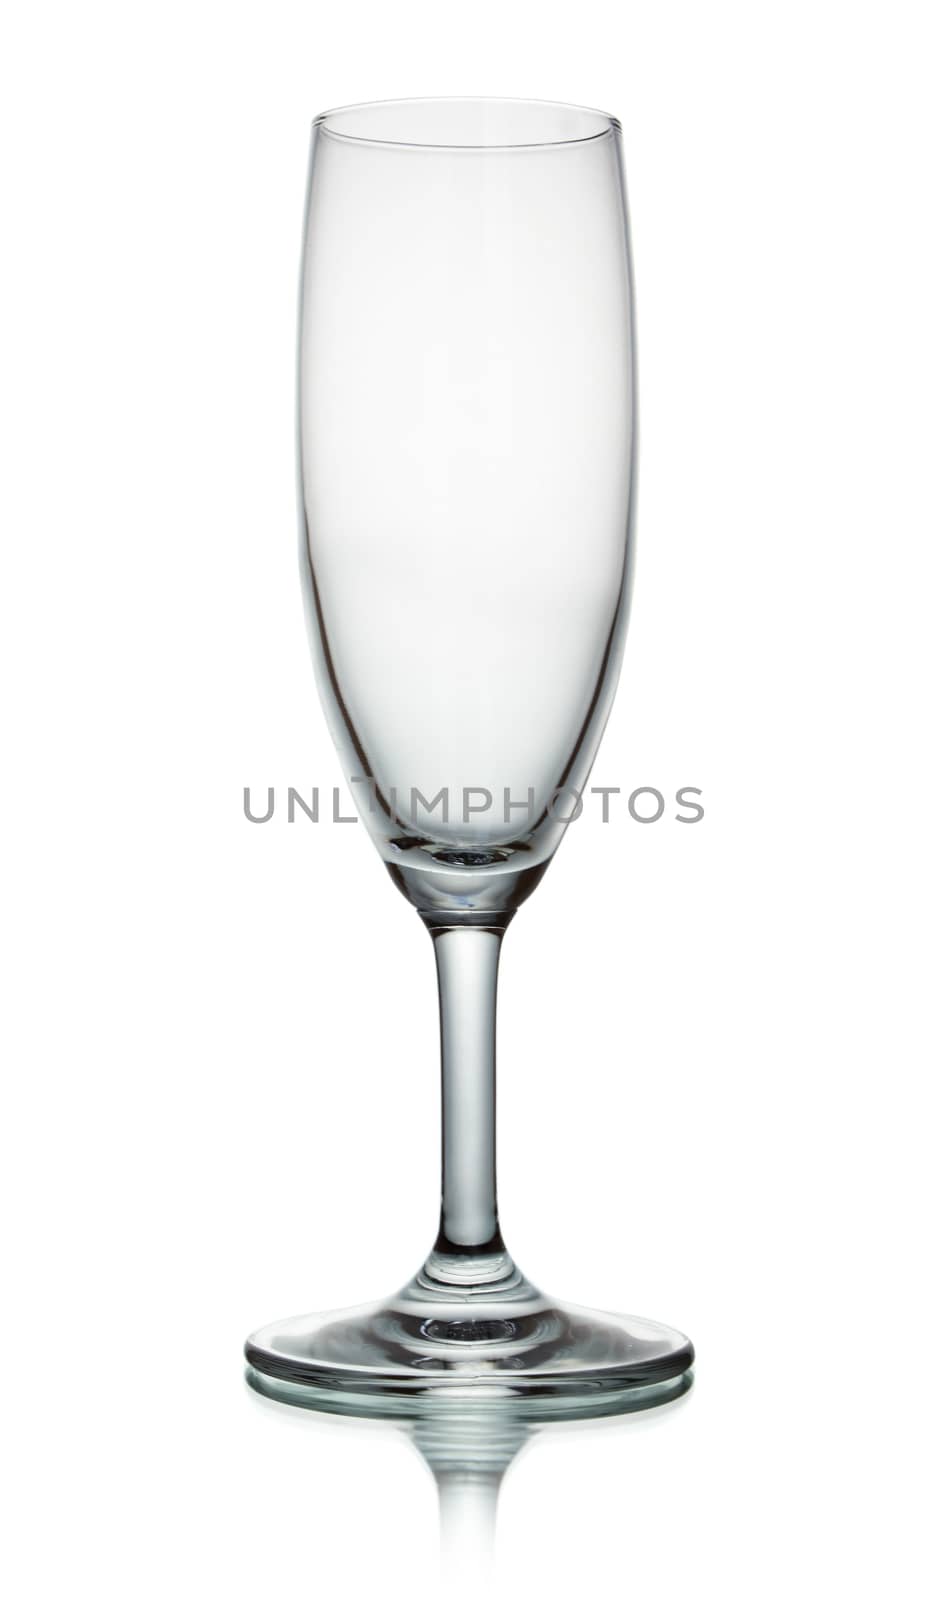 Champagne glass by Valengilda